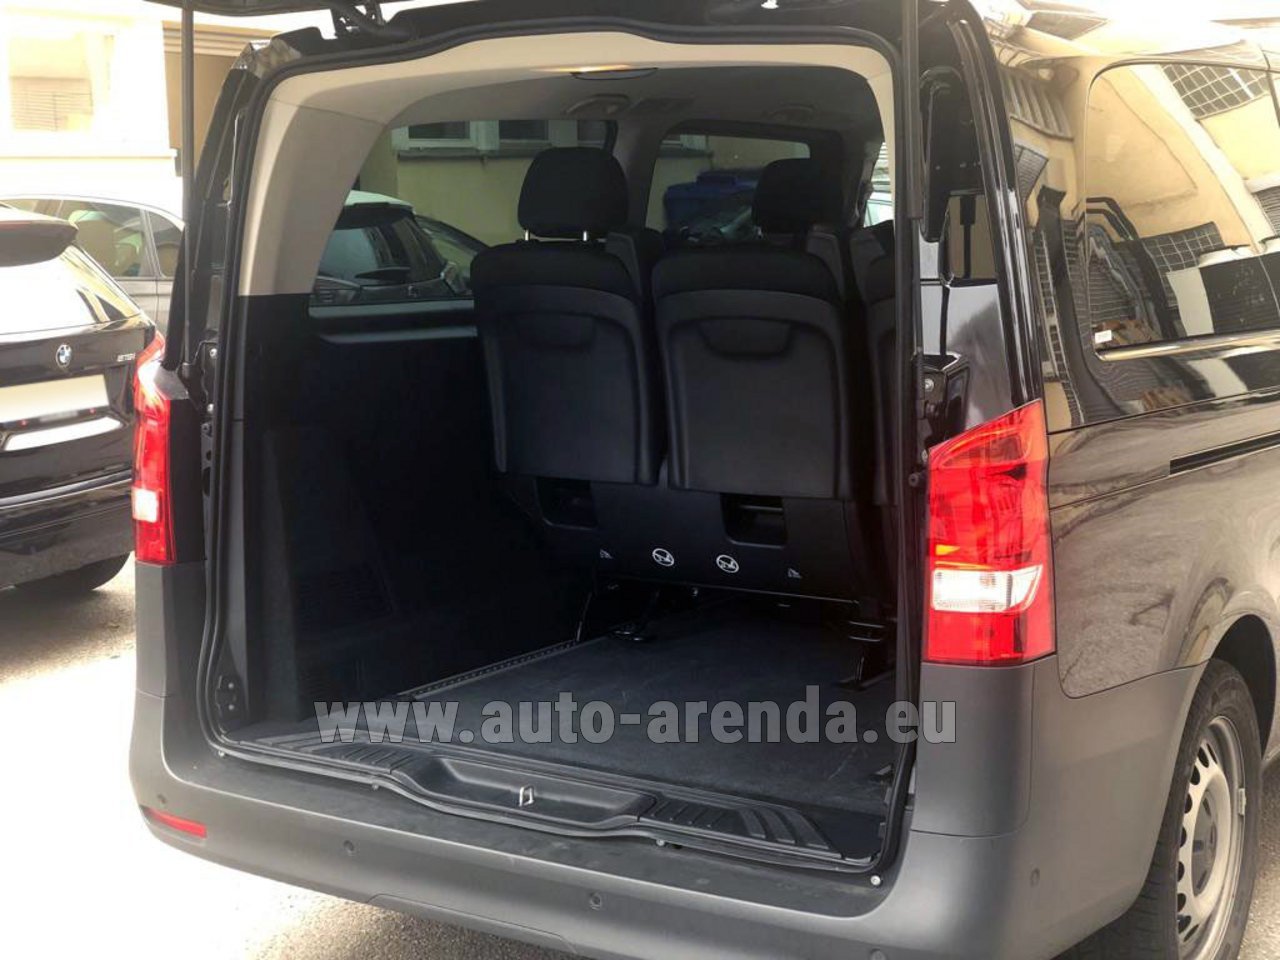 Mercedes Vito Tourer Extra Long Automatic - Rent a Car Athens